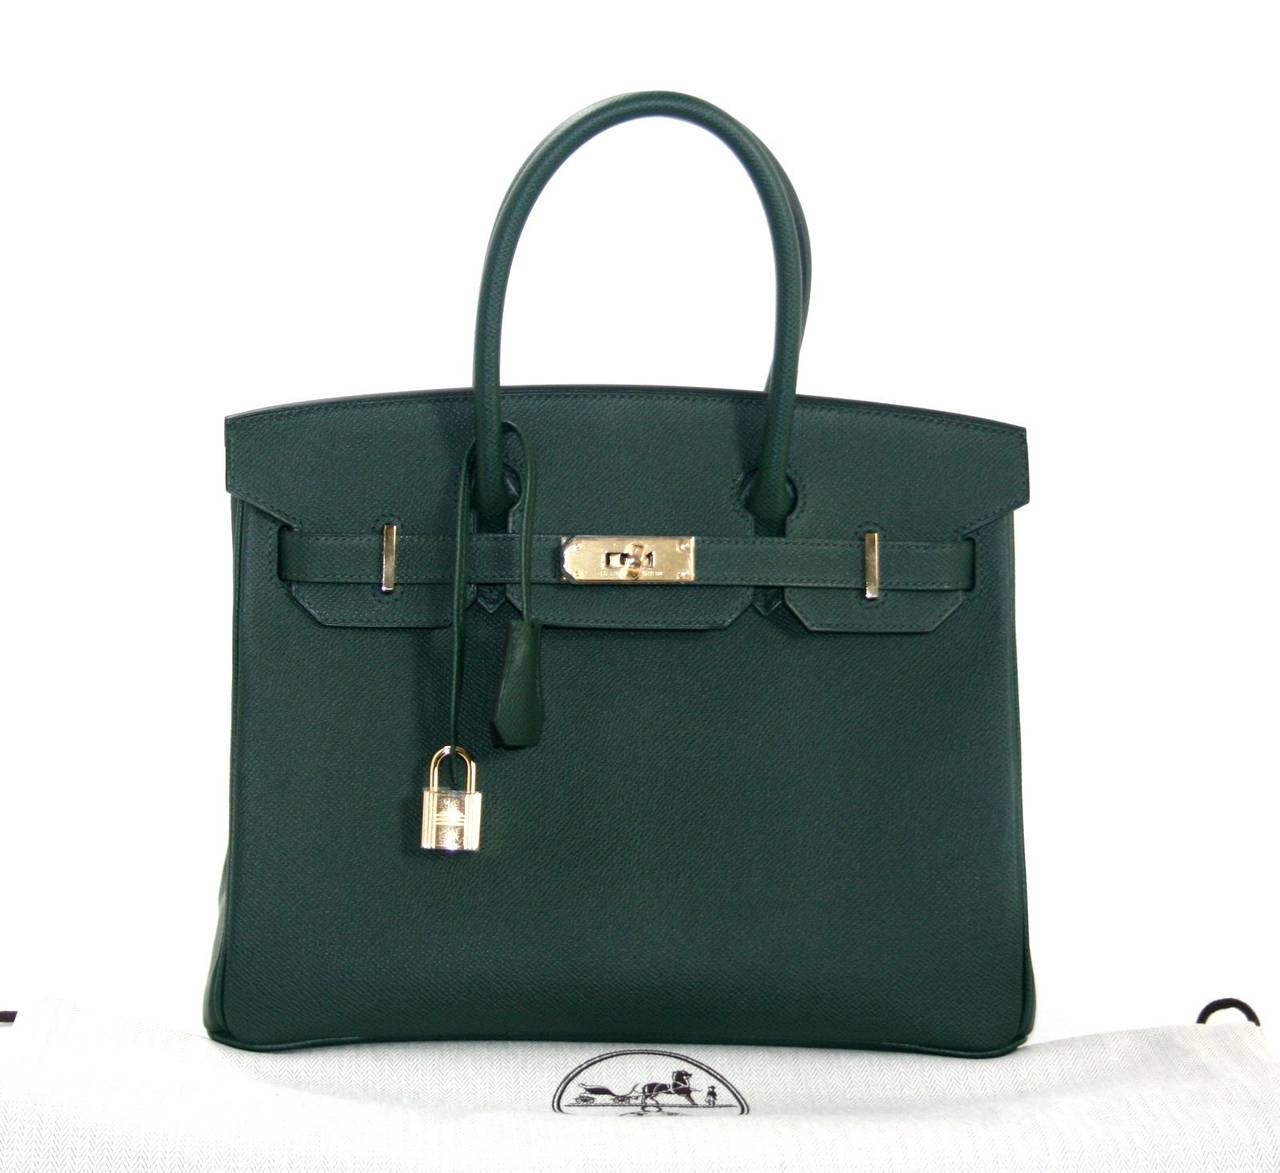 Hermès 30 cm Vert Anglais Epsom Birkin Bag with Gold Hardware 3